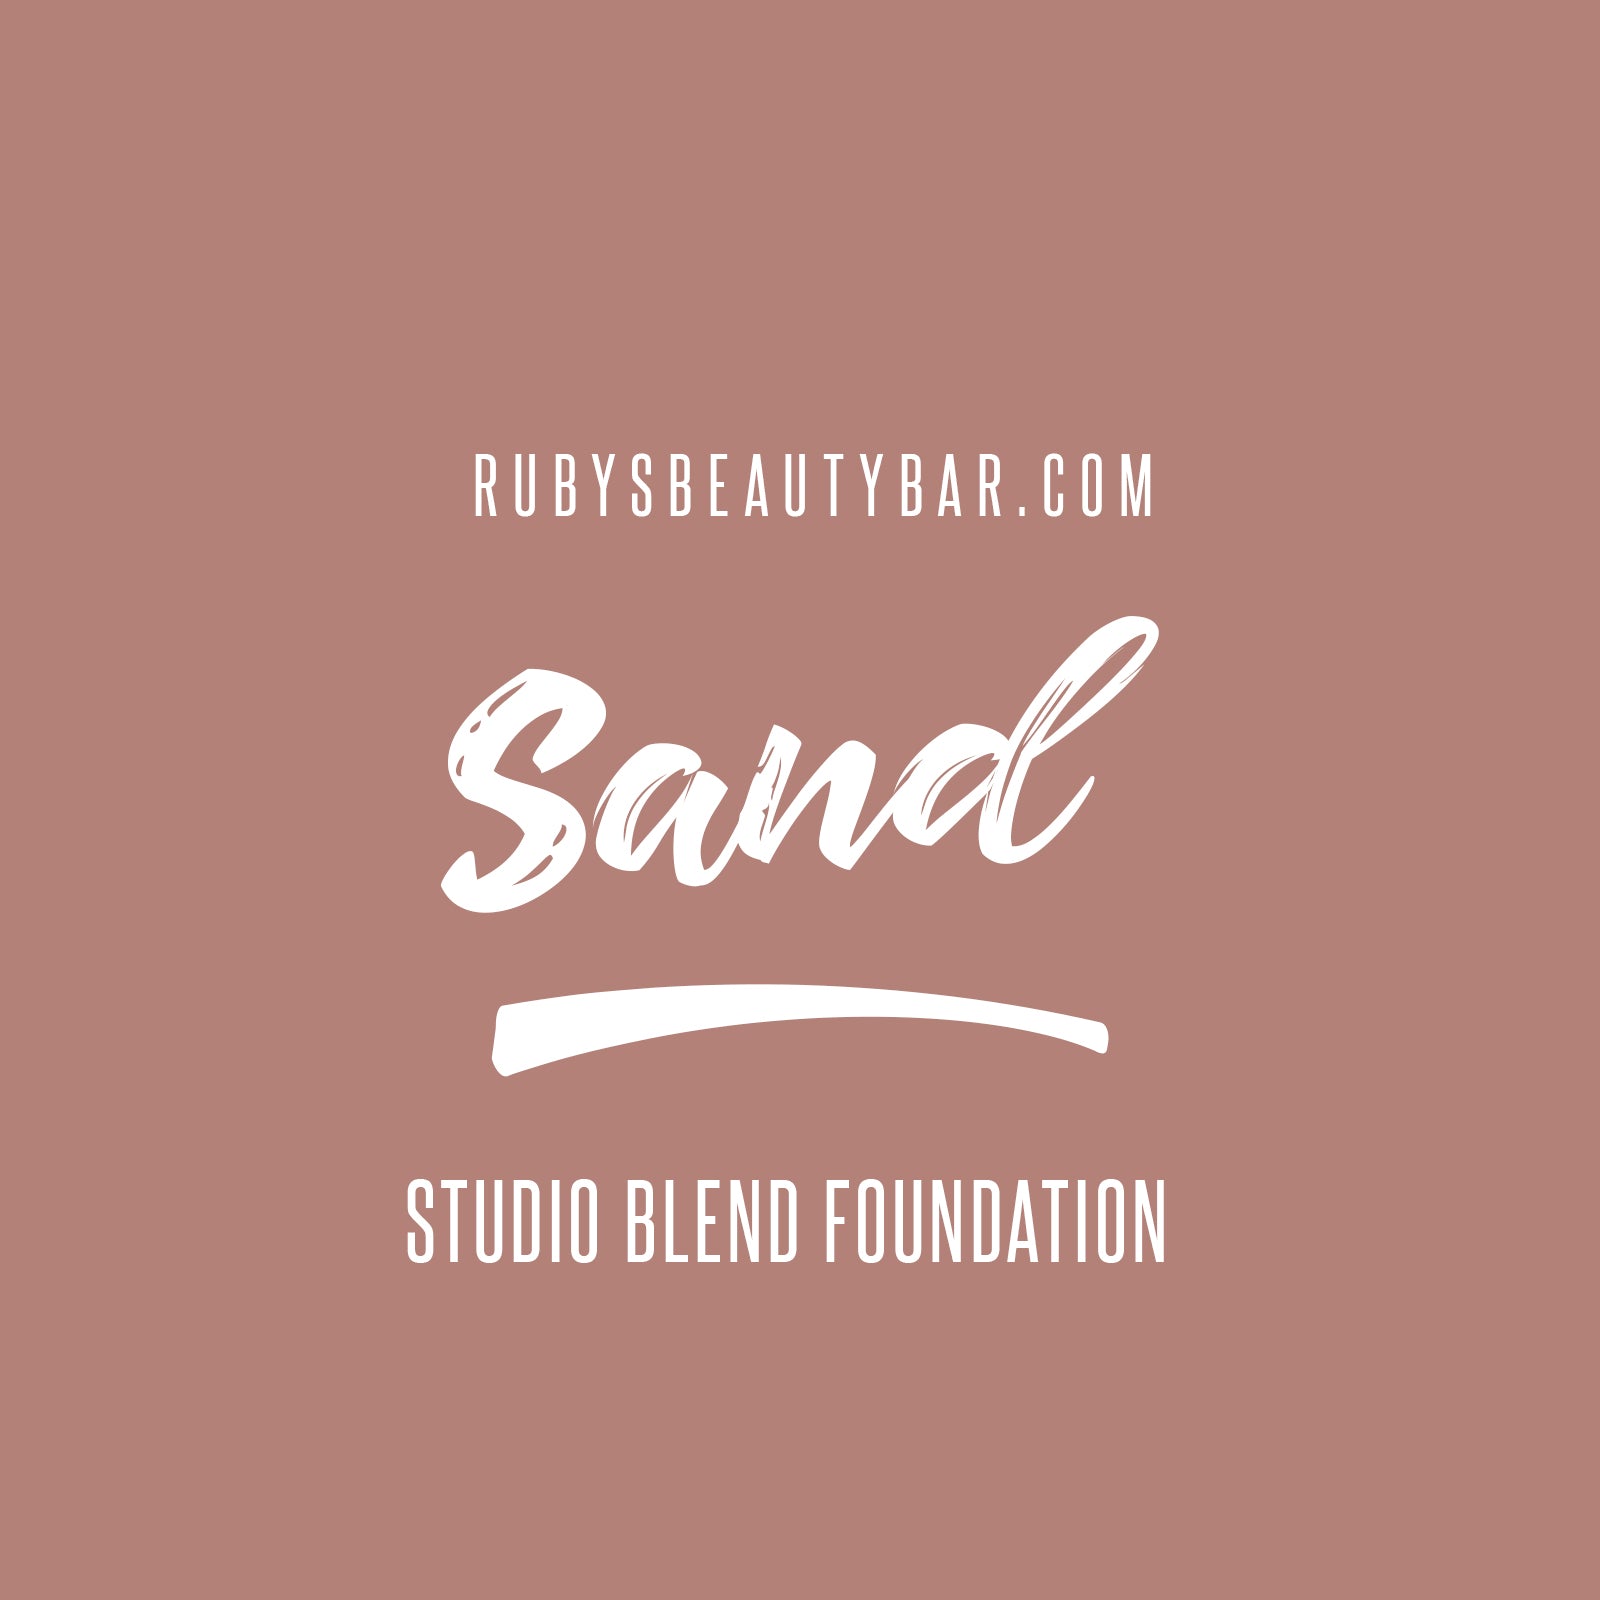 Sand Studio Blend Foundation - rubybeautycle